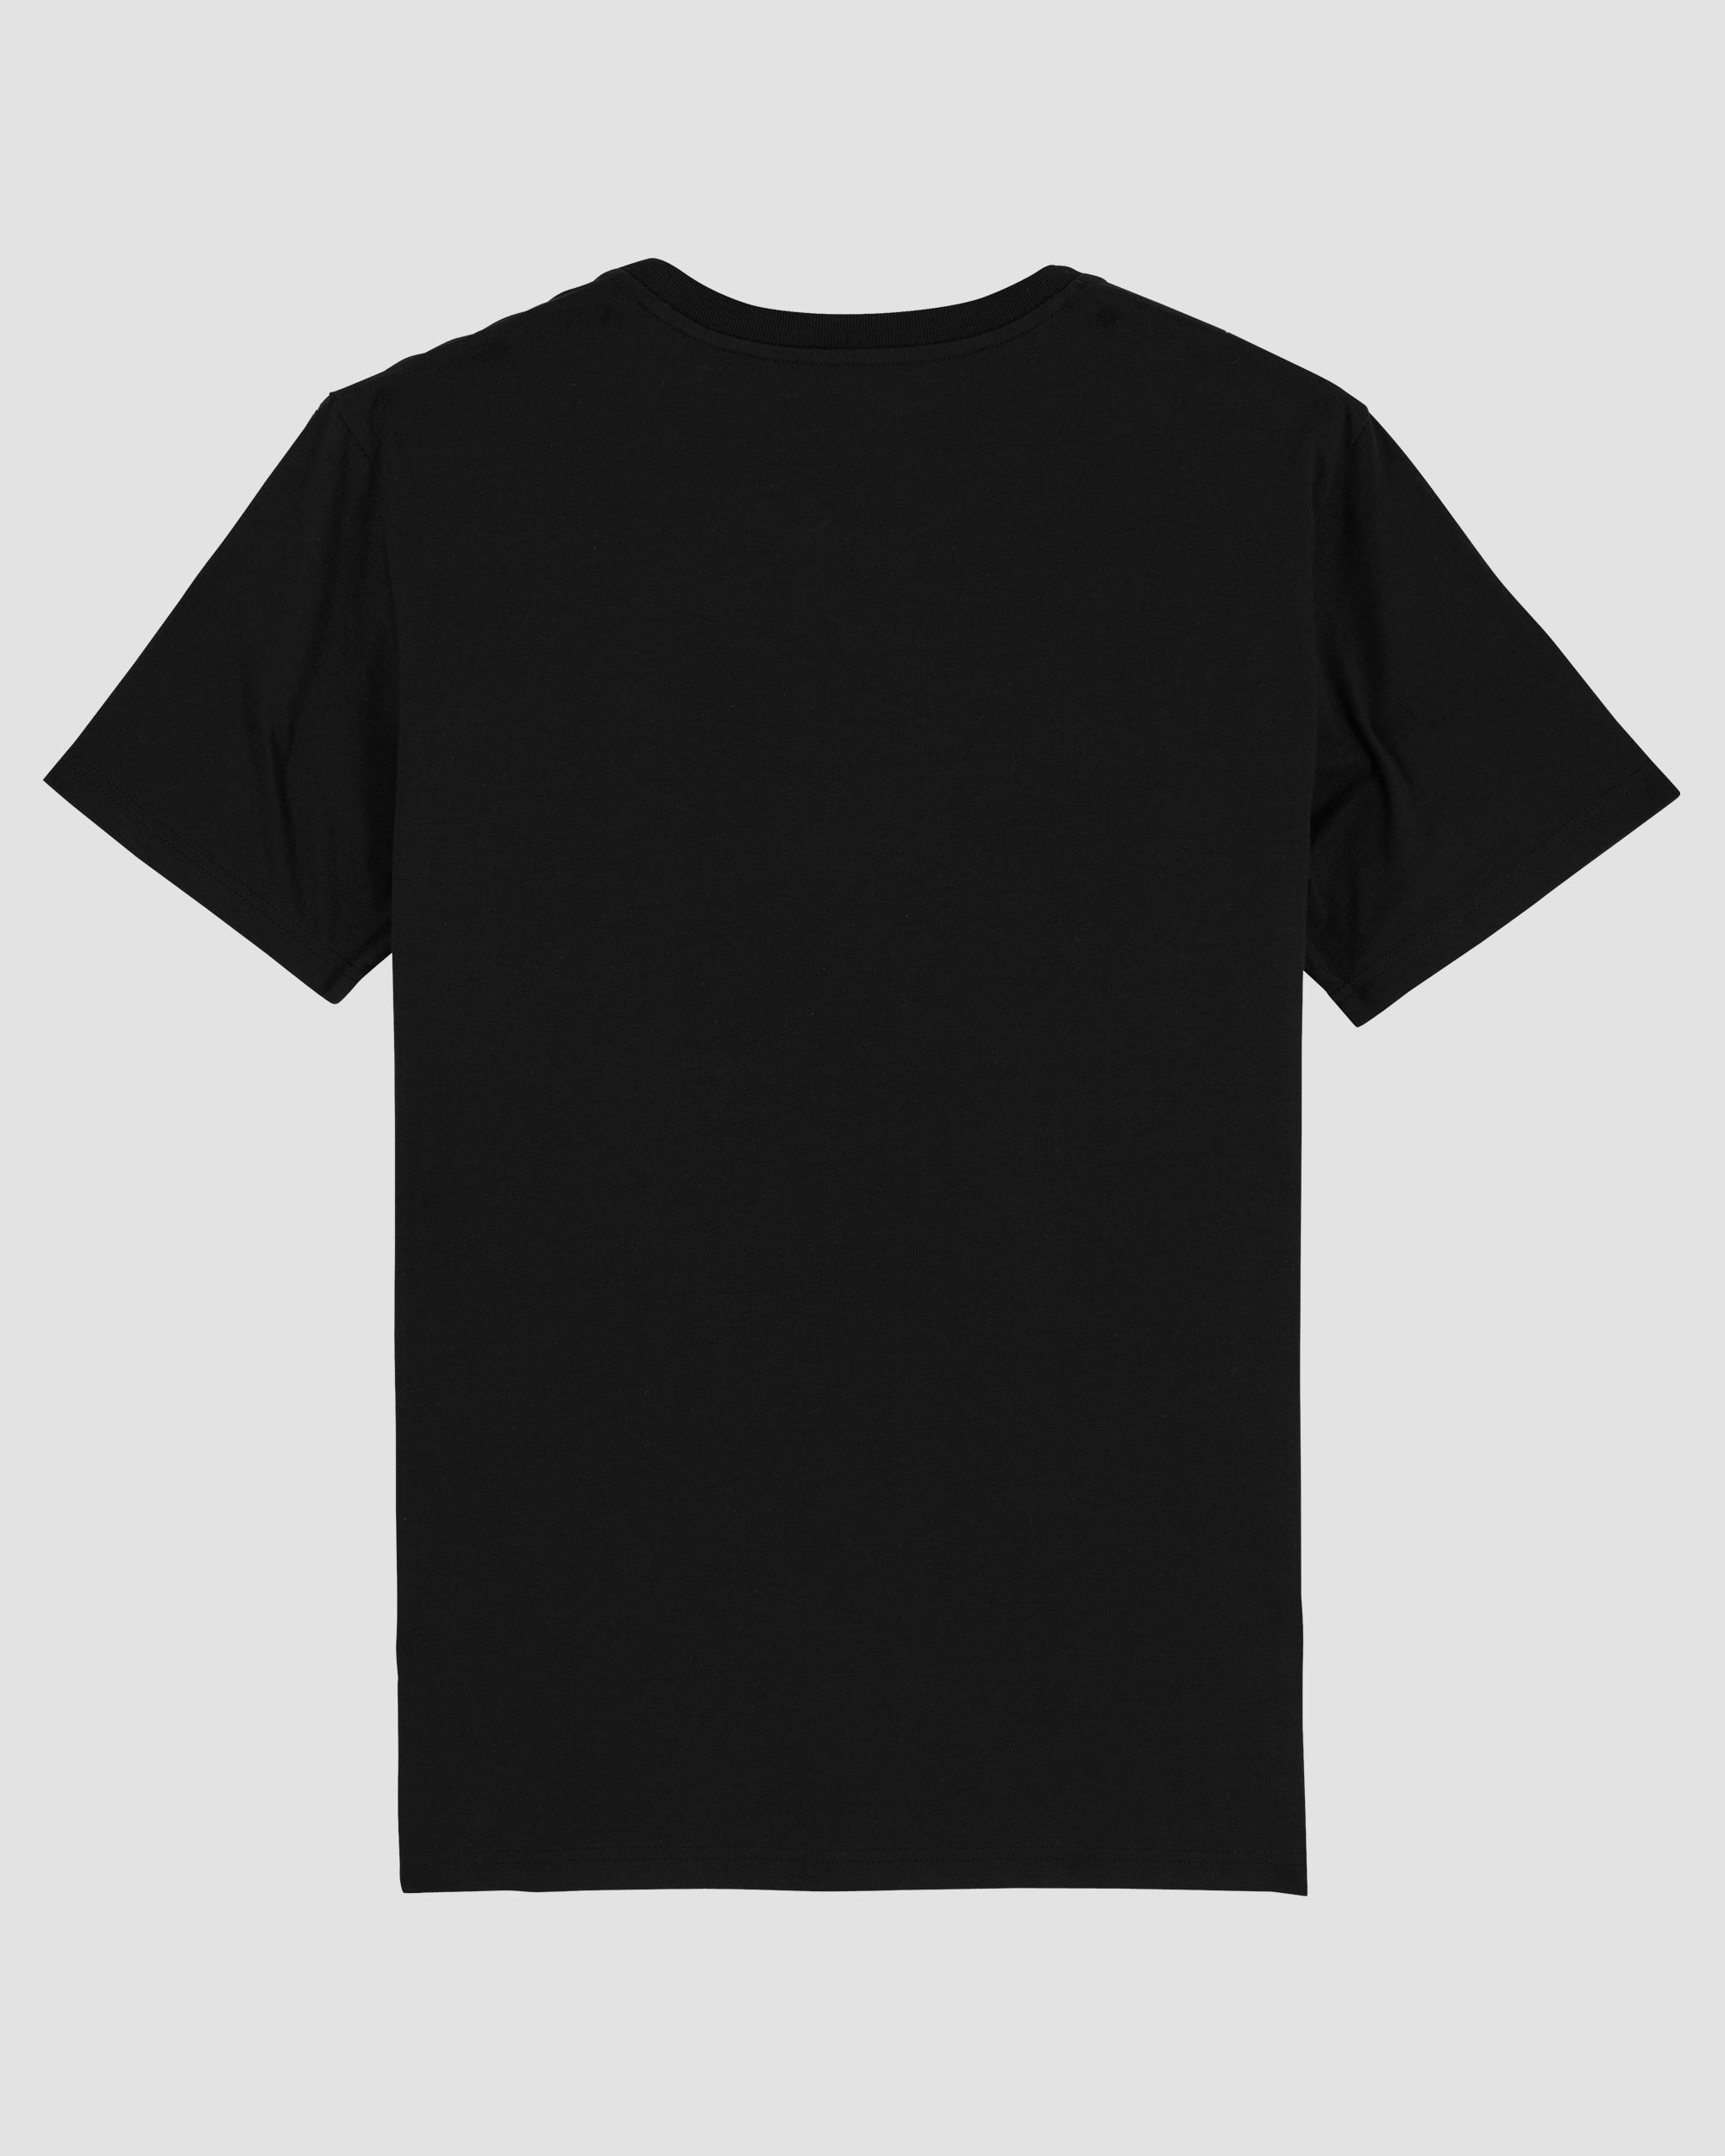 Viking Warrior | 3-Style T-Shirt